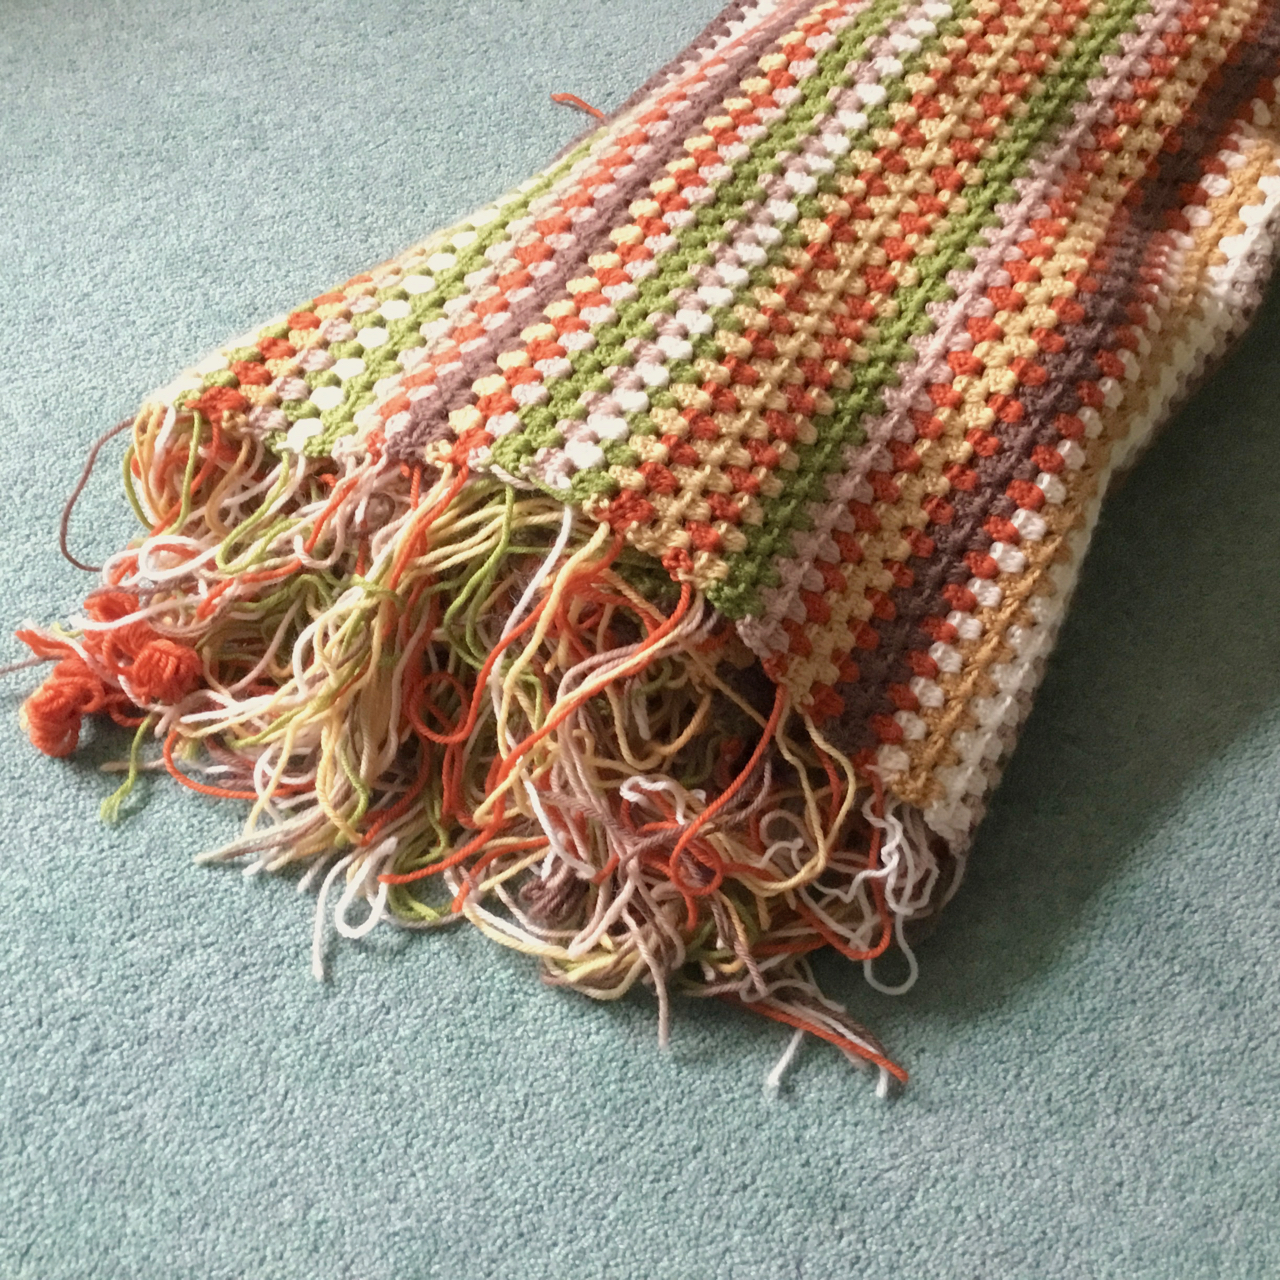 Crochet Granny Stripe Blanket